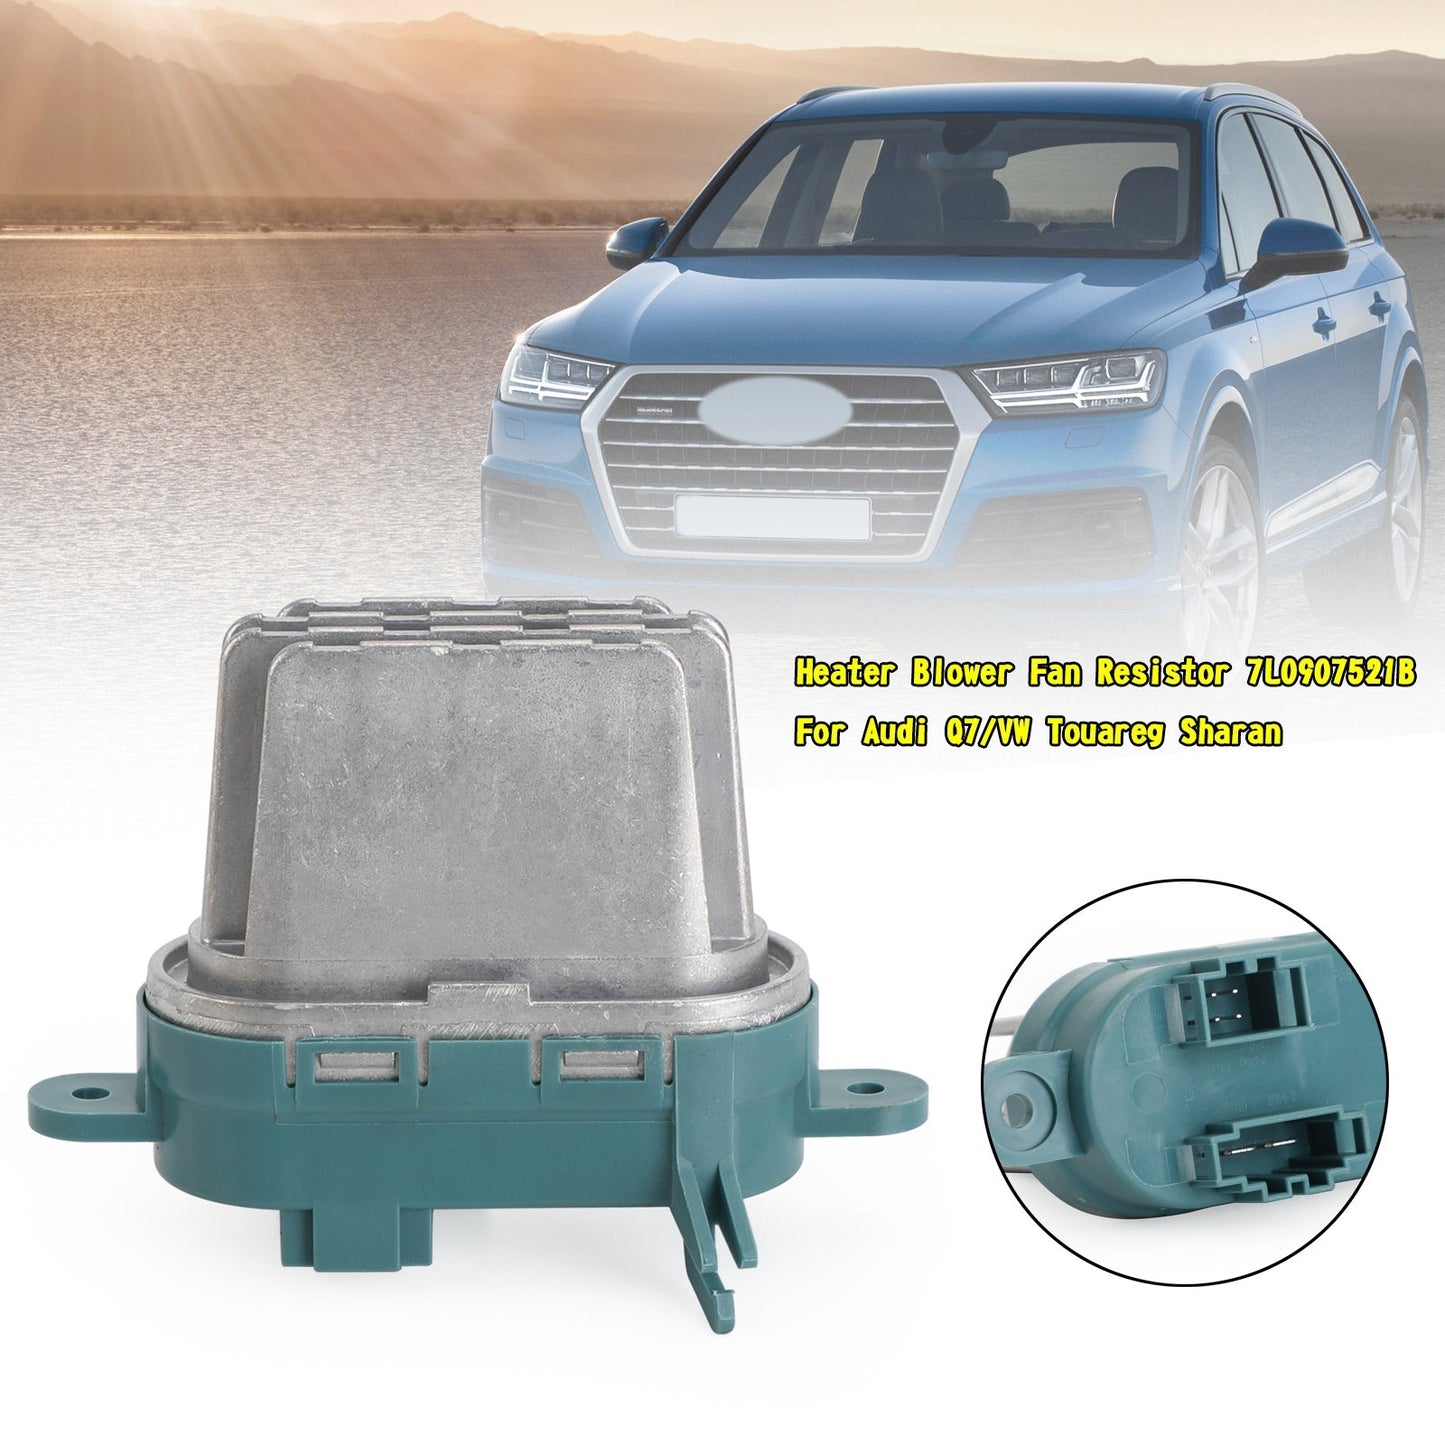 Heater Blower Fan Resistor 7L0907521B For Audi Q7/VW Touareg Sharan